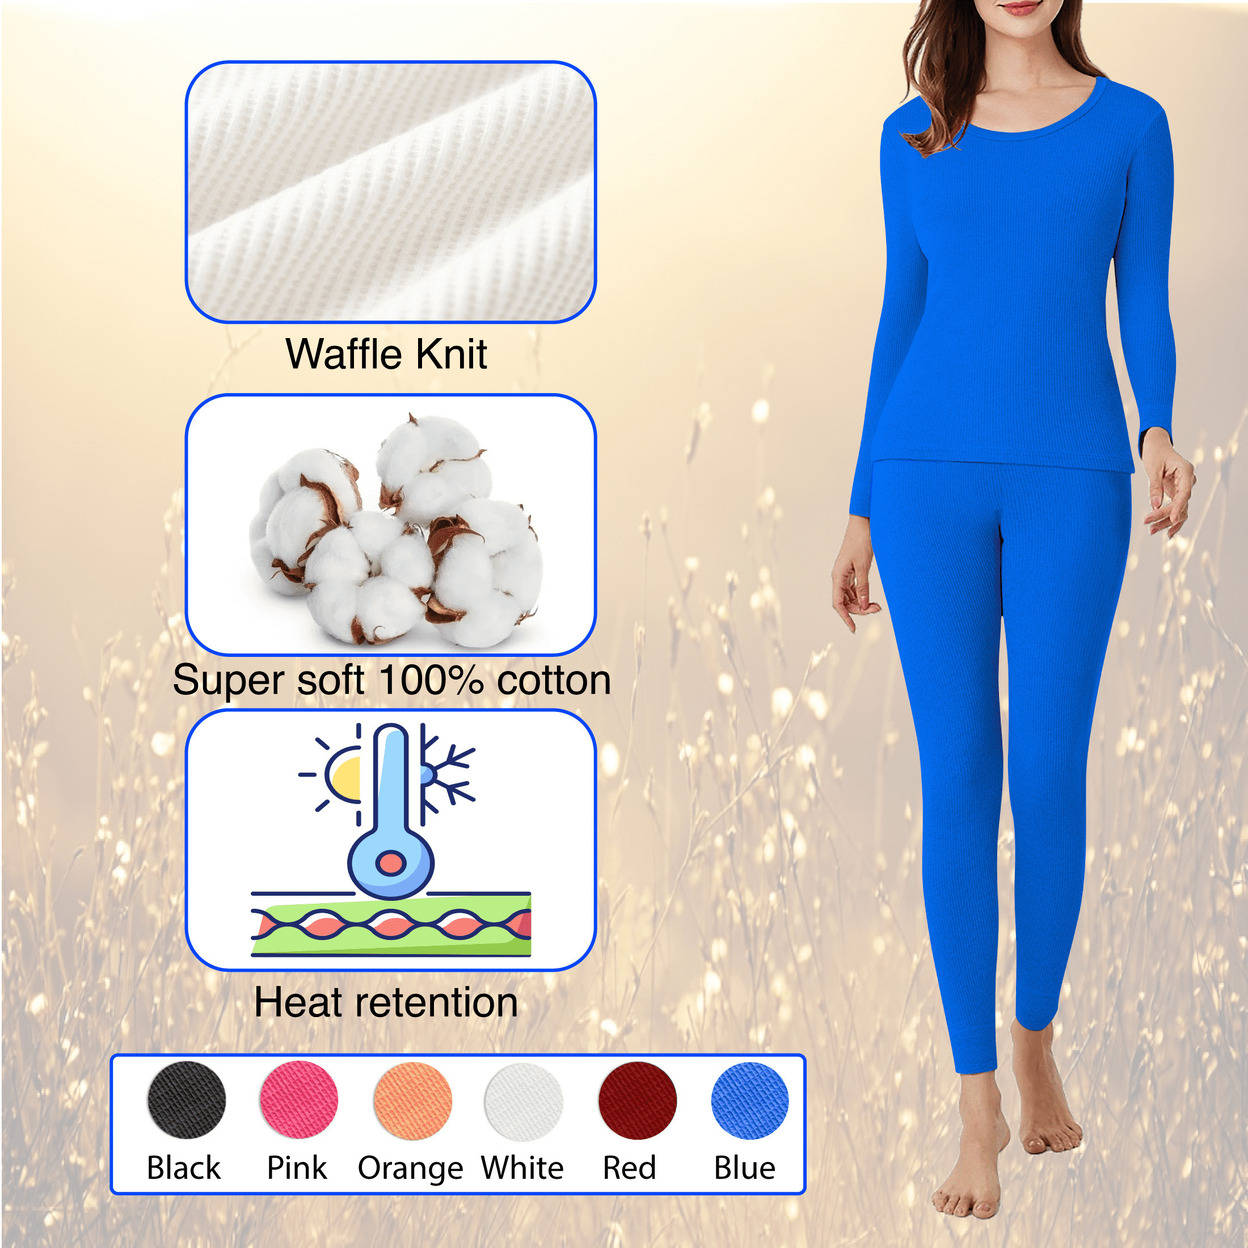 2-Piece: Women's Ultra Soft Cotton Waffle Knit Thermal Sets - Pink, X-large